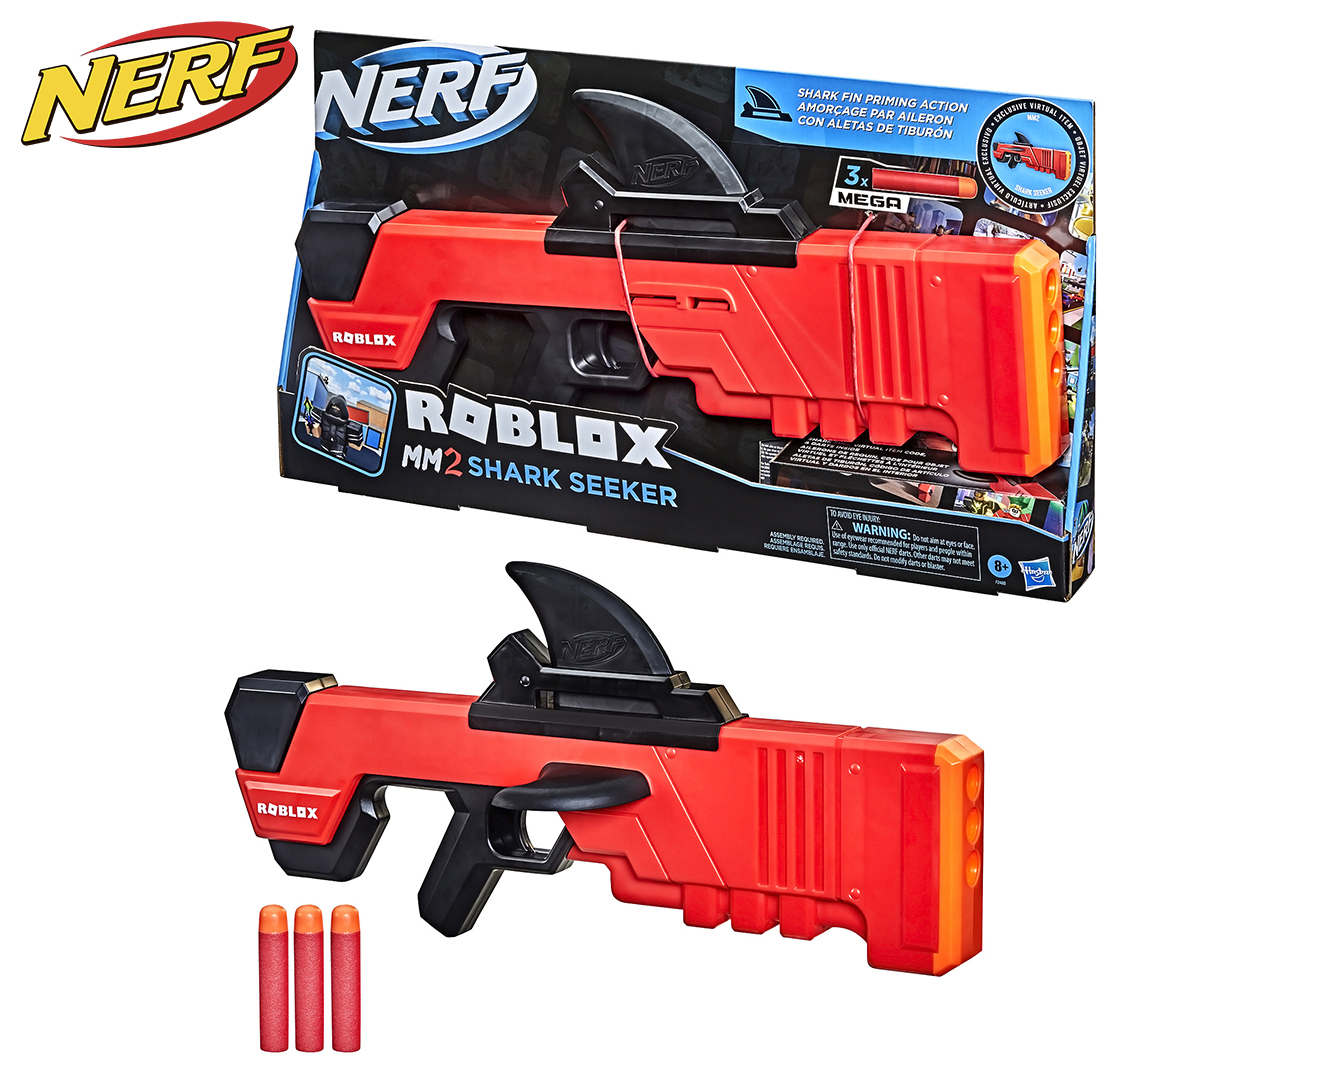 Nerf Roblox MM2 Dartbringer Dart Blaster Toy Includes Exclusive